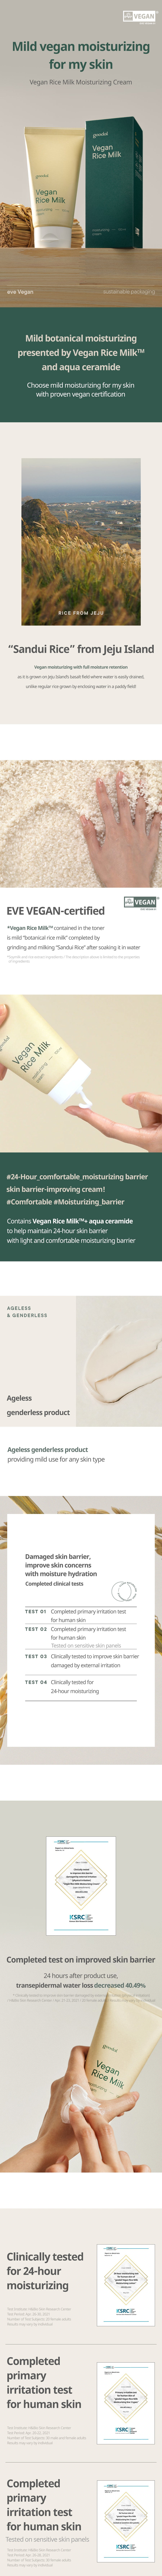 Goodal Vegan Rice Milk Moisturizing Cream 70ml - La Cosmetique